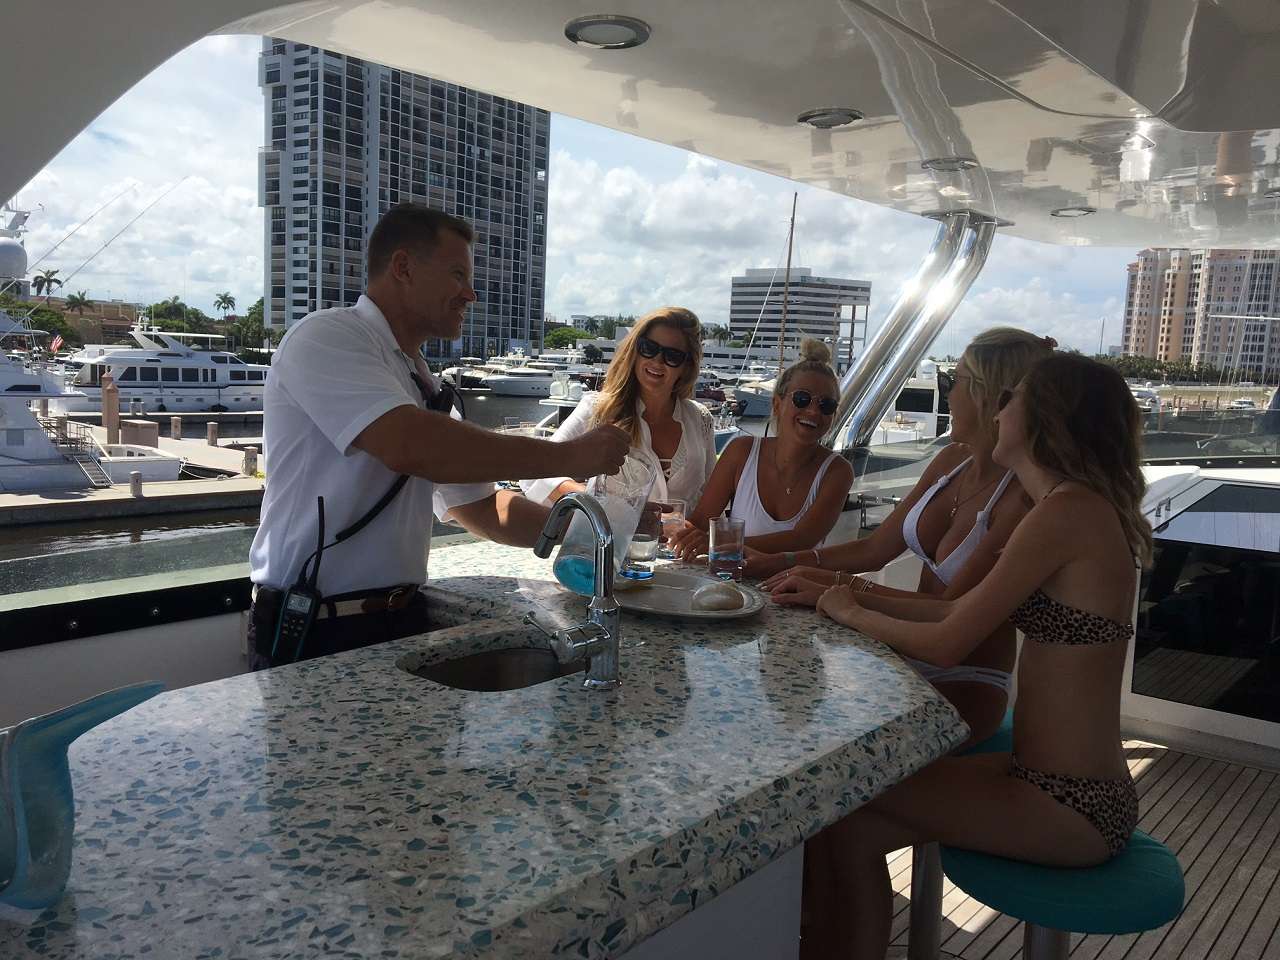 legendary - Motor Boat Charter USA & Boat hire in Florida & Bahamas 5